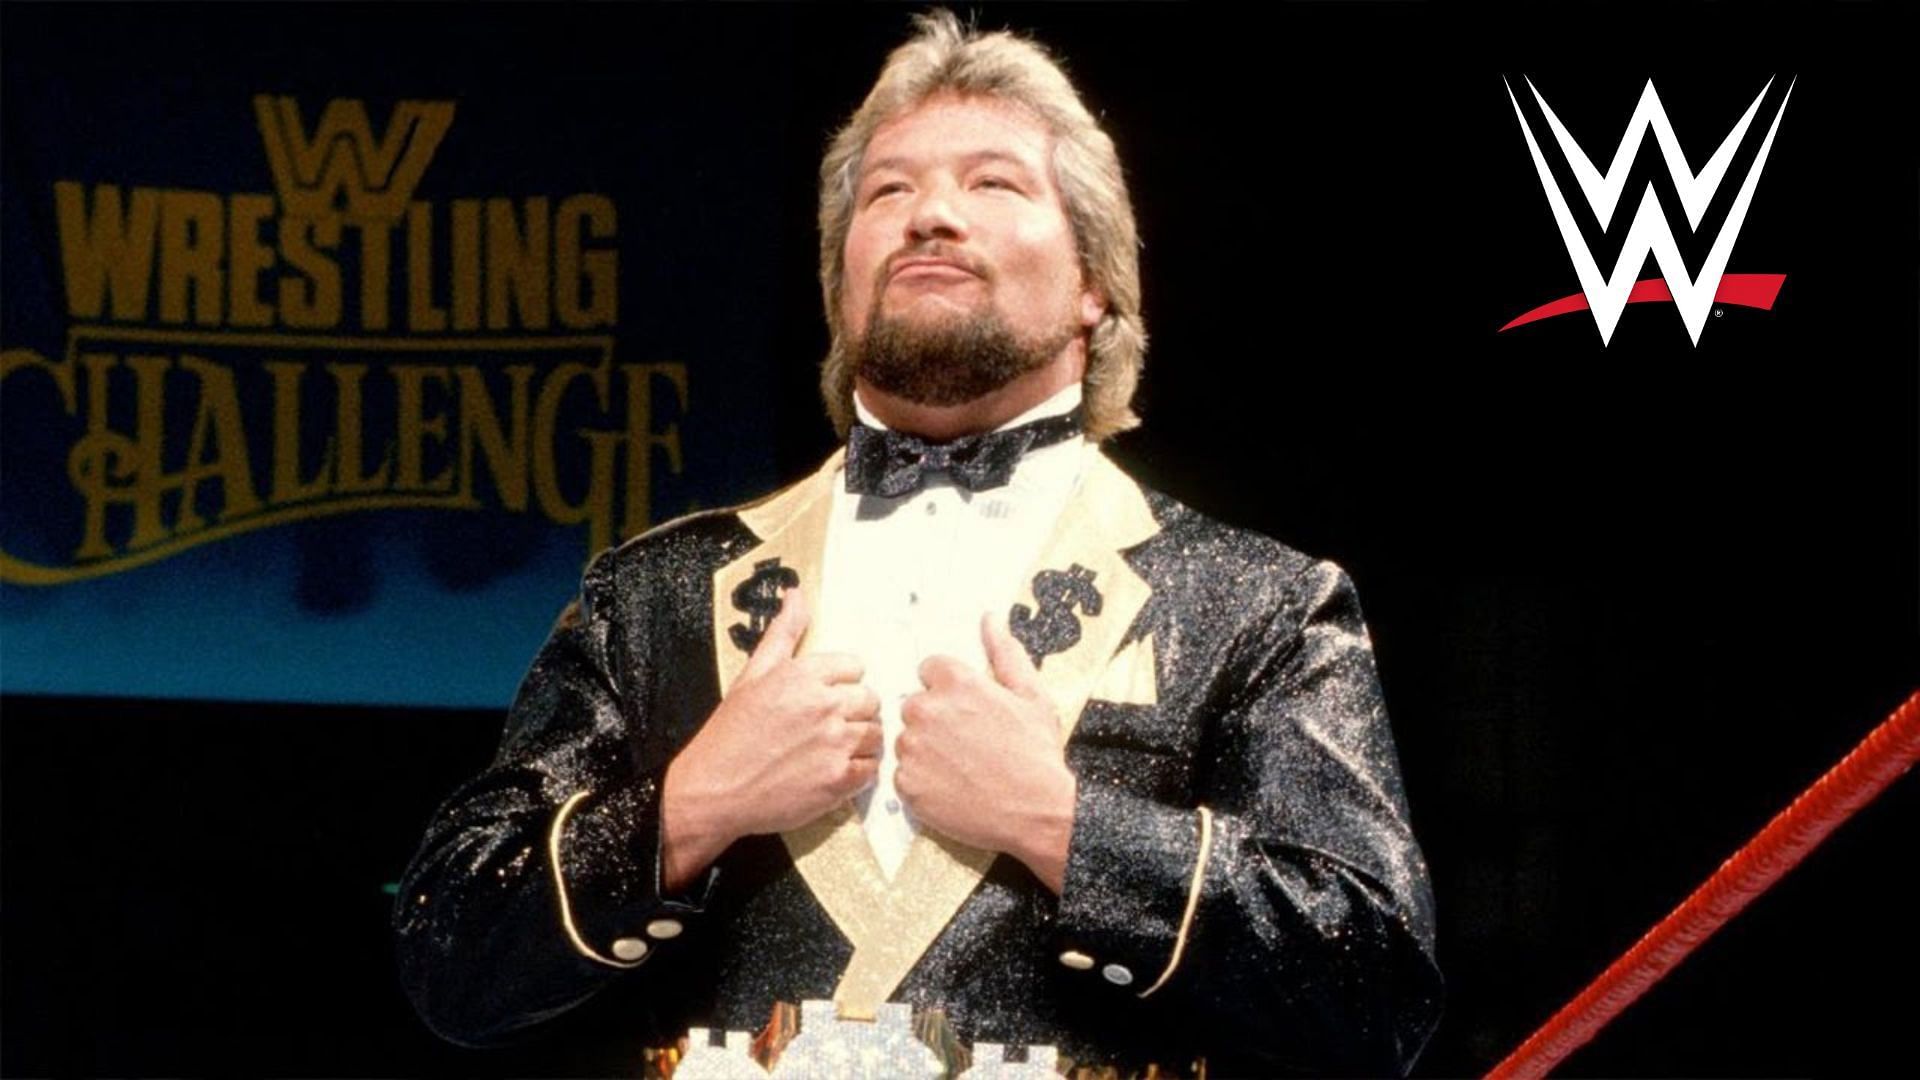 Ted DiBiase Sr., also known as The Million Dollar Man